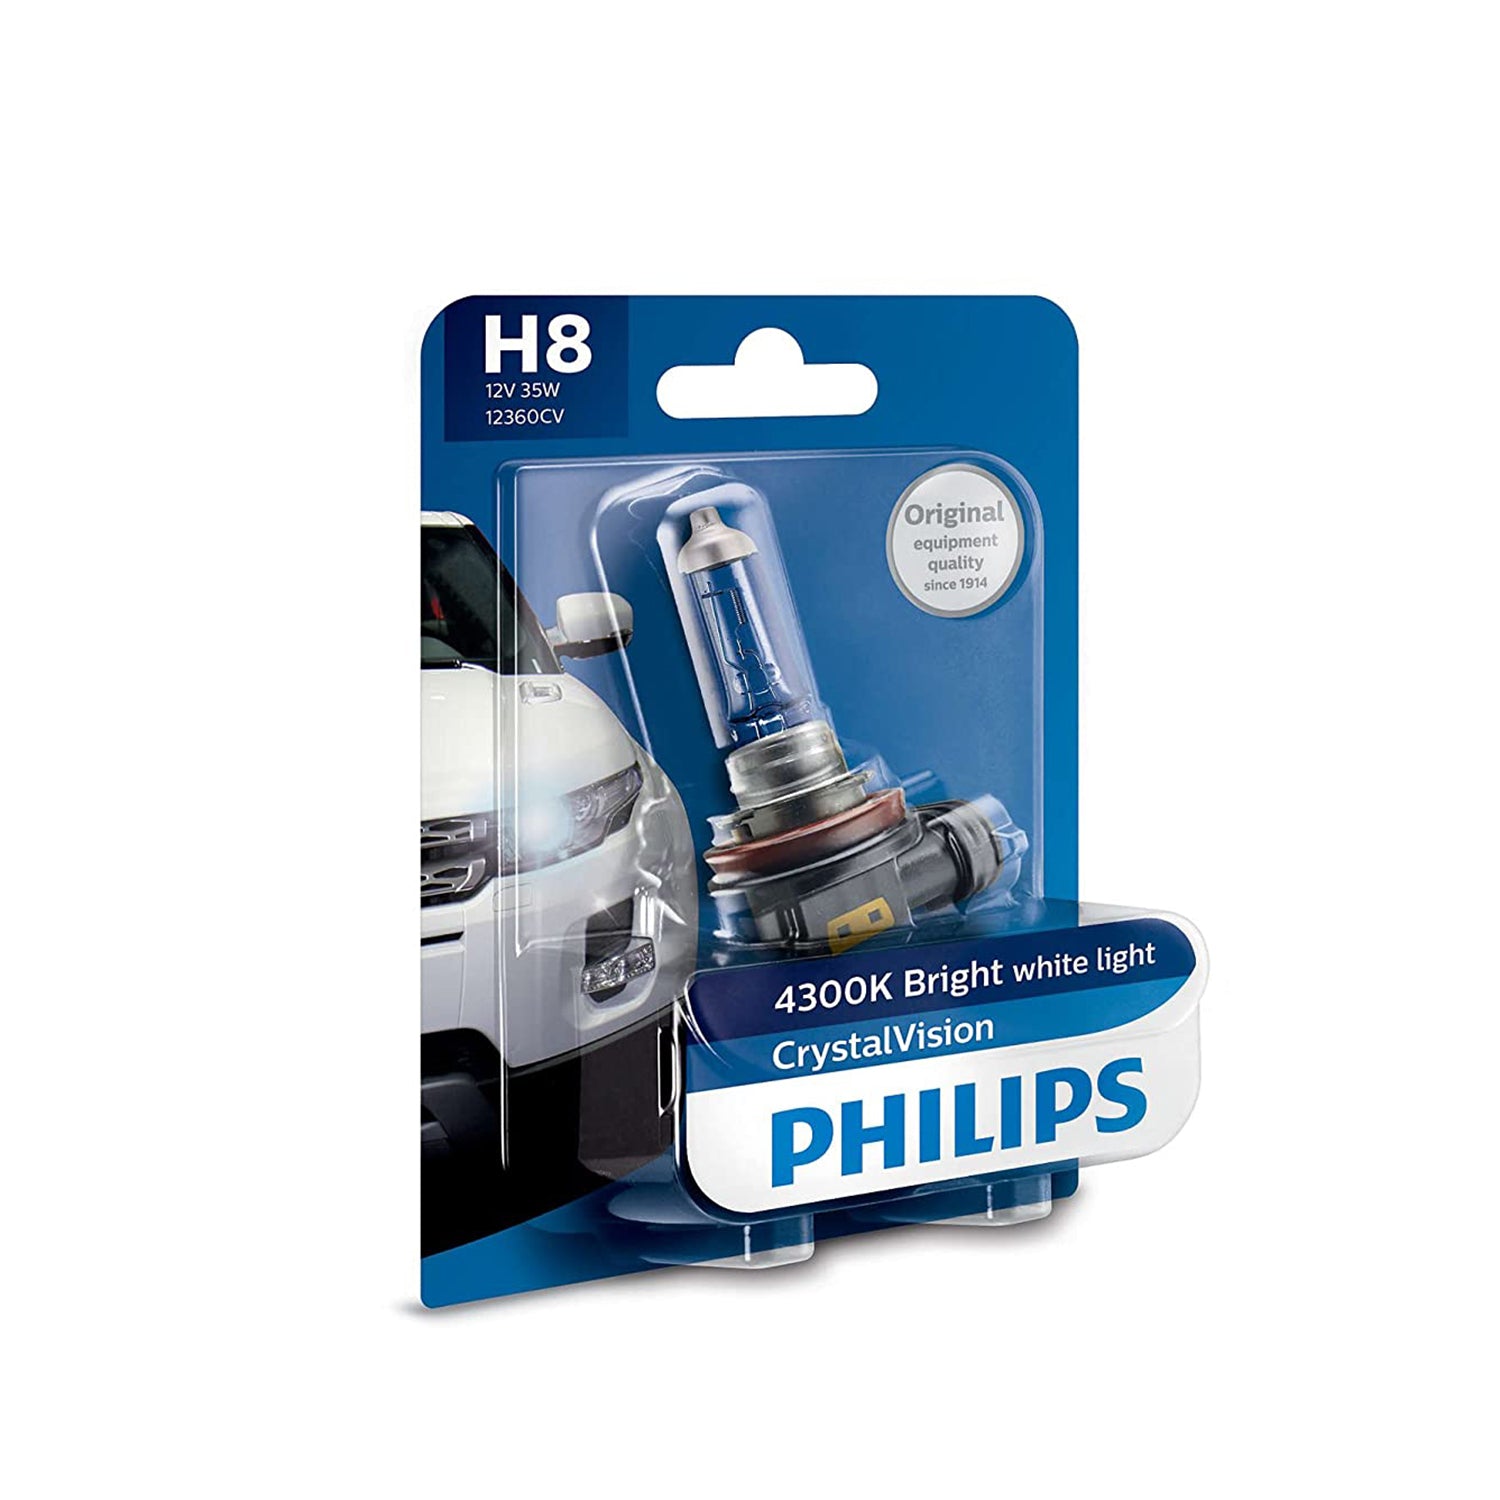 Philips H8 12360 Crystal Vision Foglight Bulb (12V, 35W)